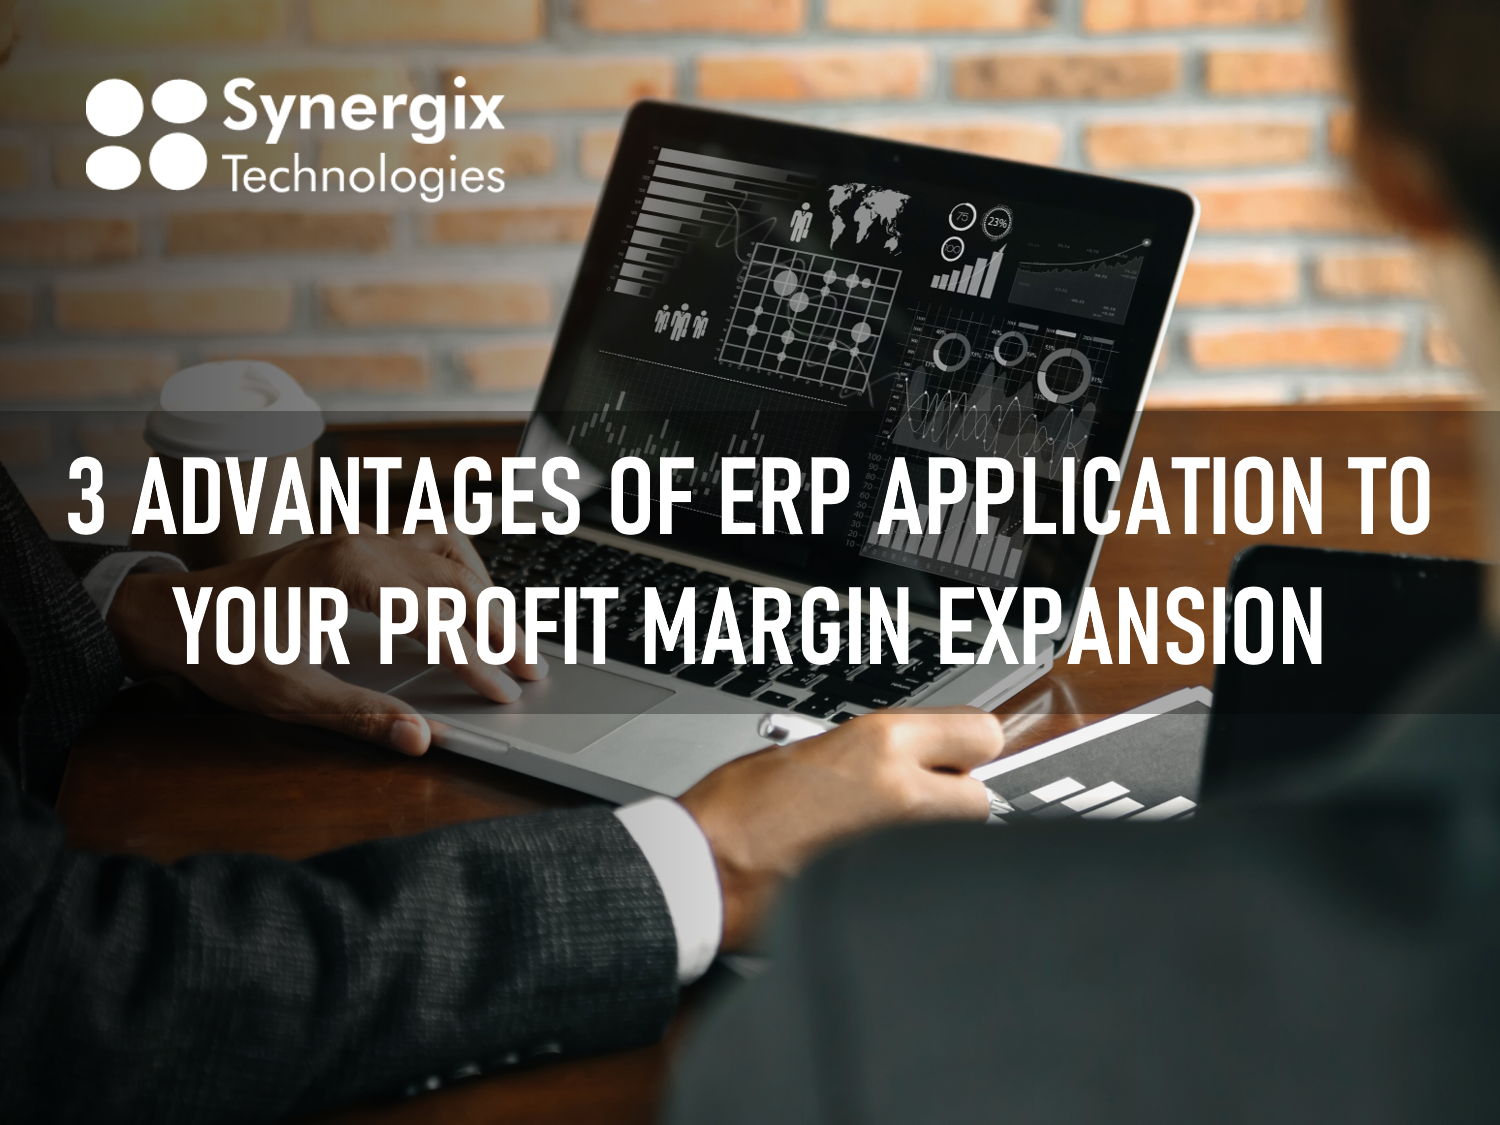 3 Advantages of ERP Application to Your Profit Margin Expansion